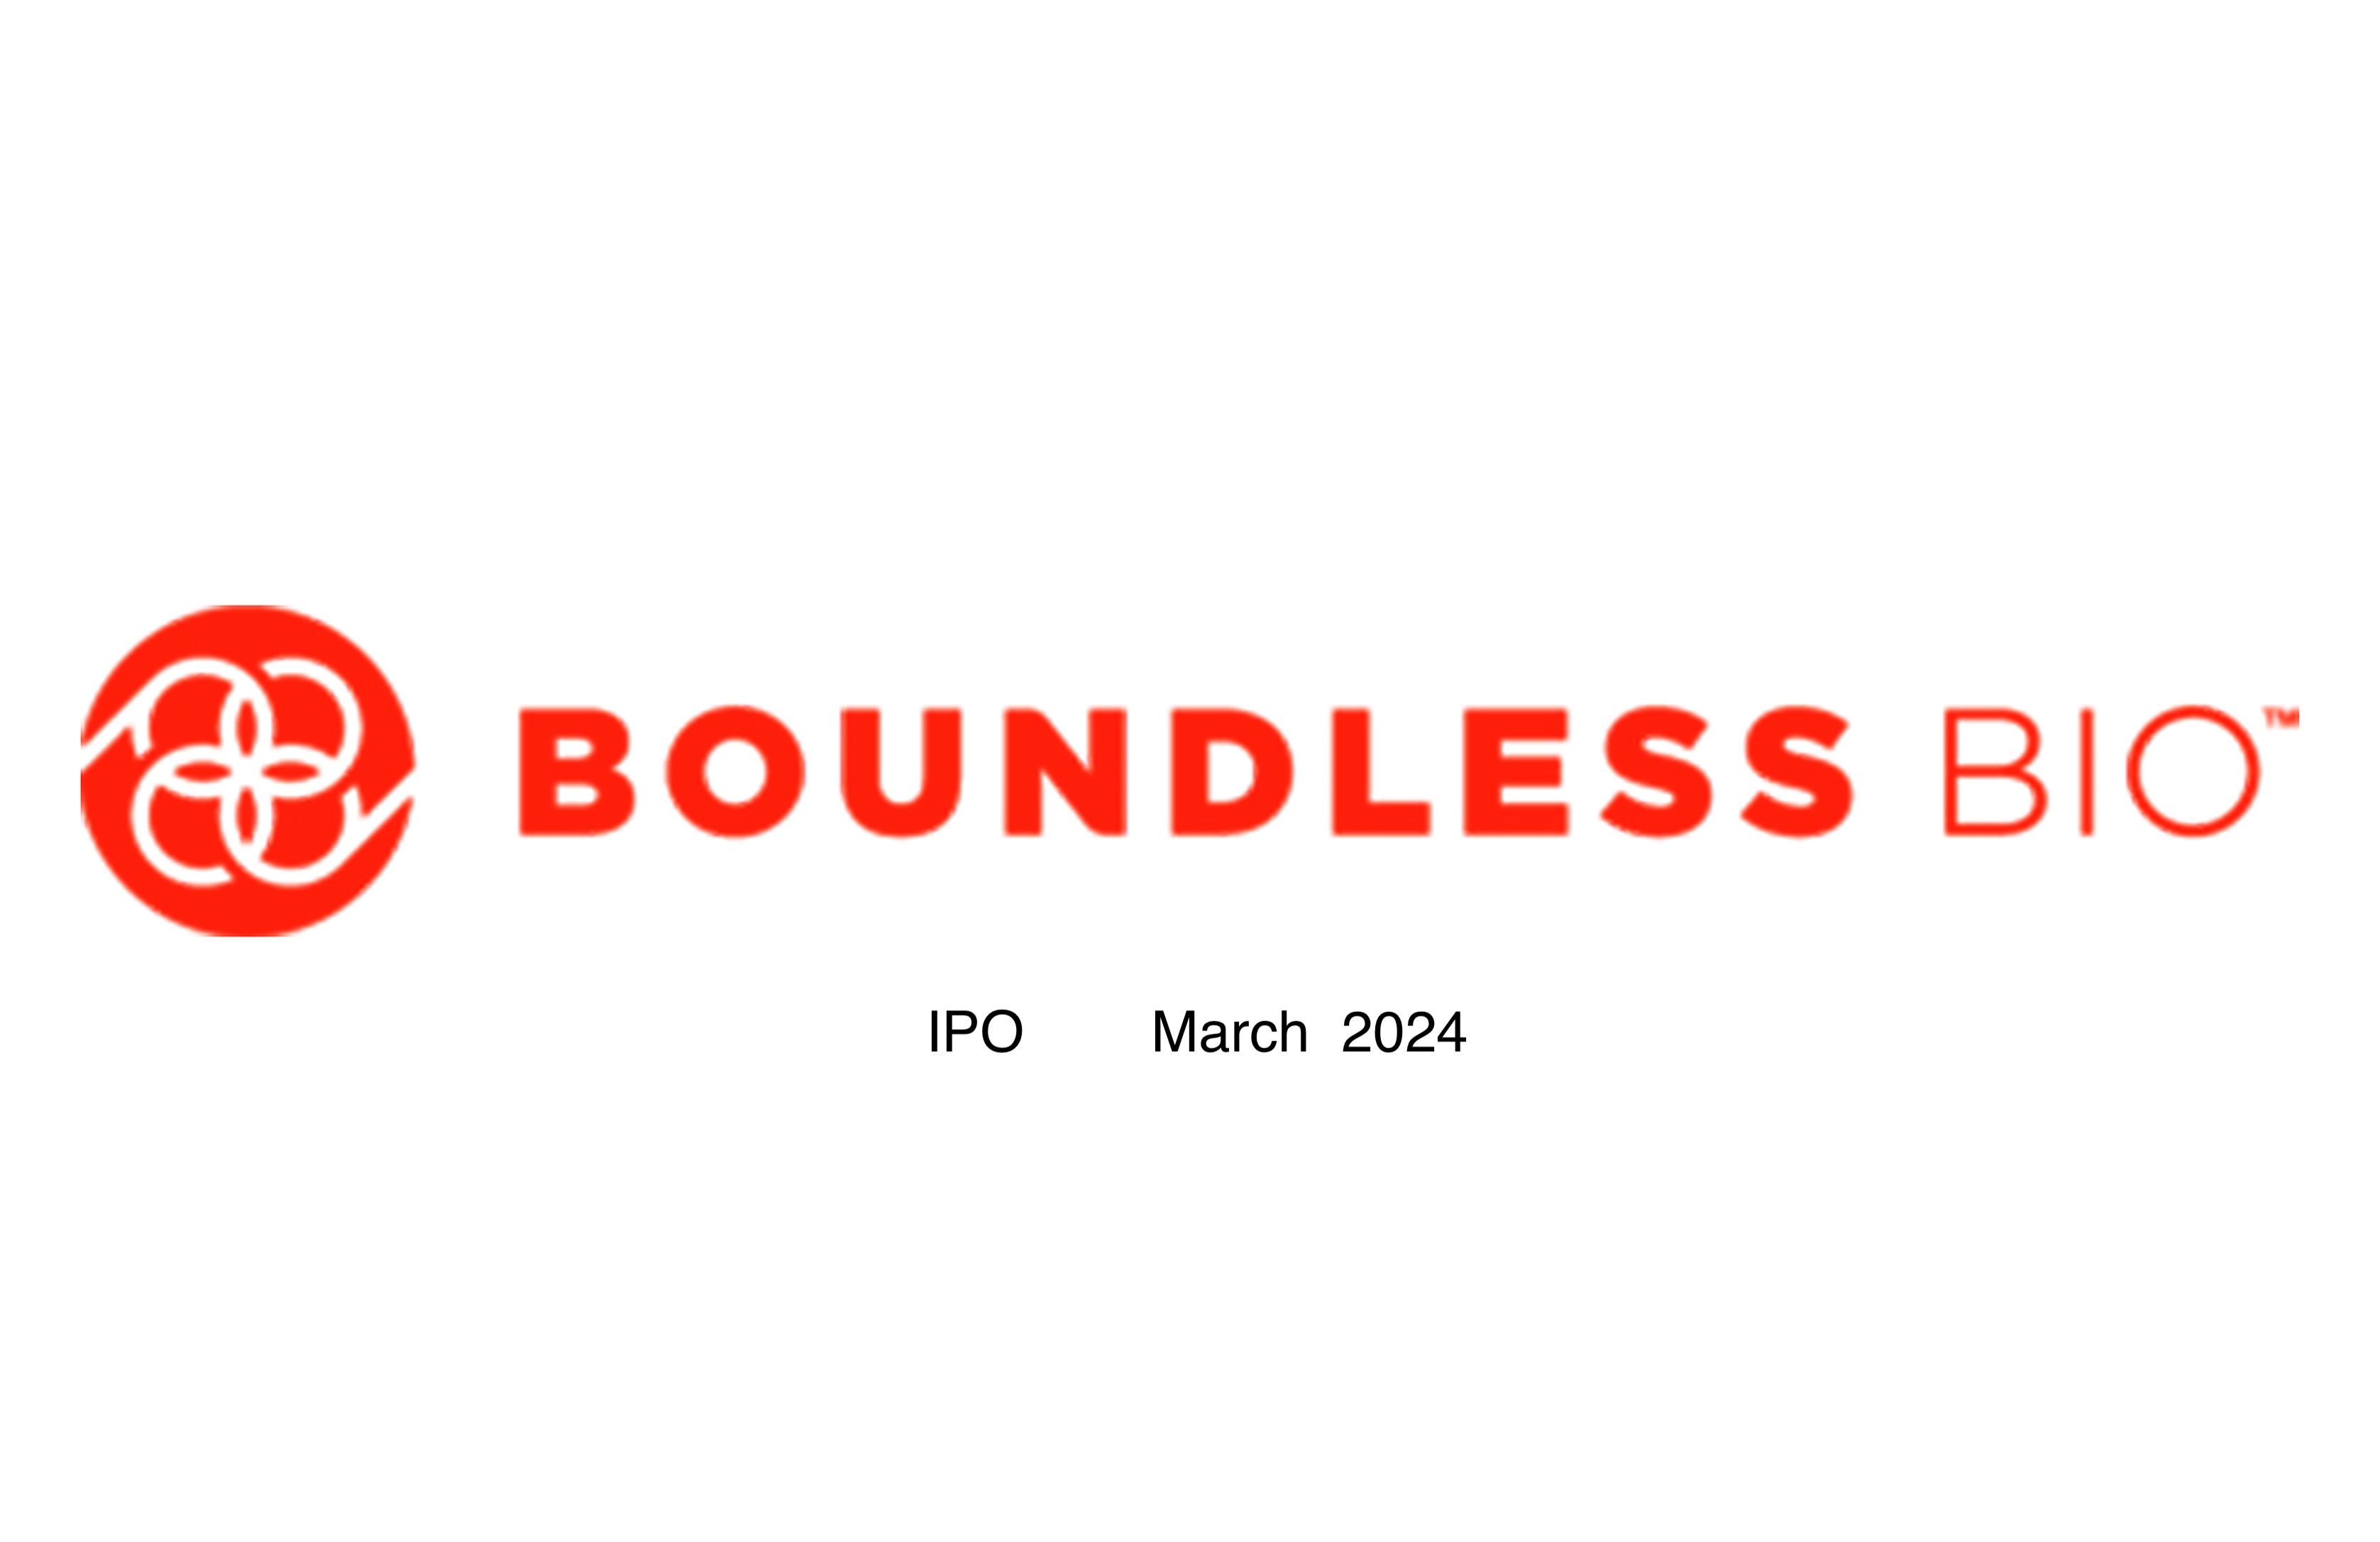 boundless.jpg